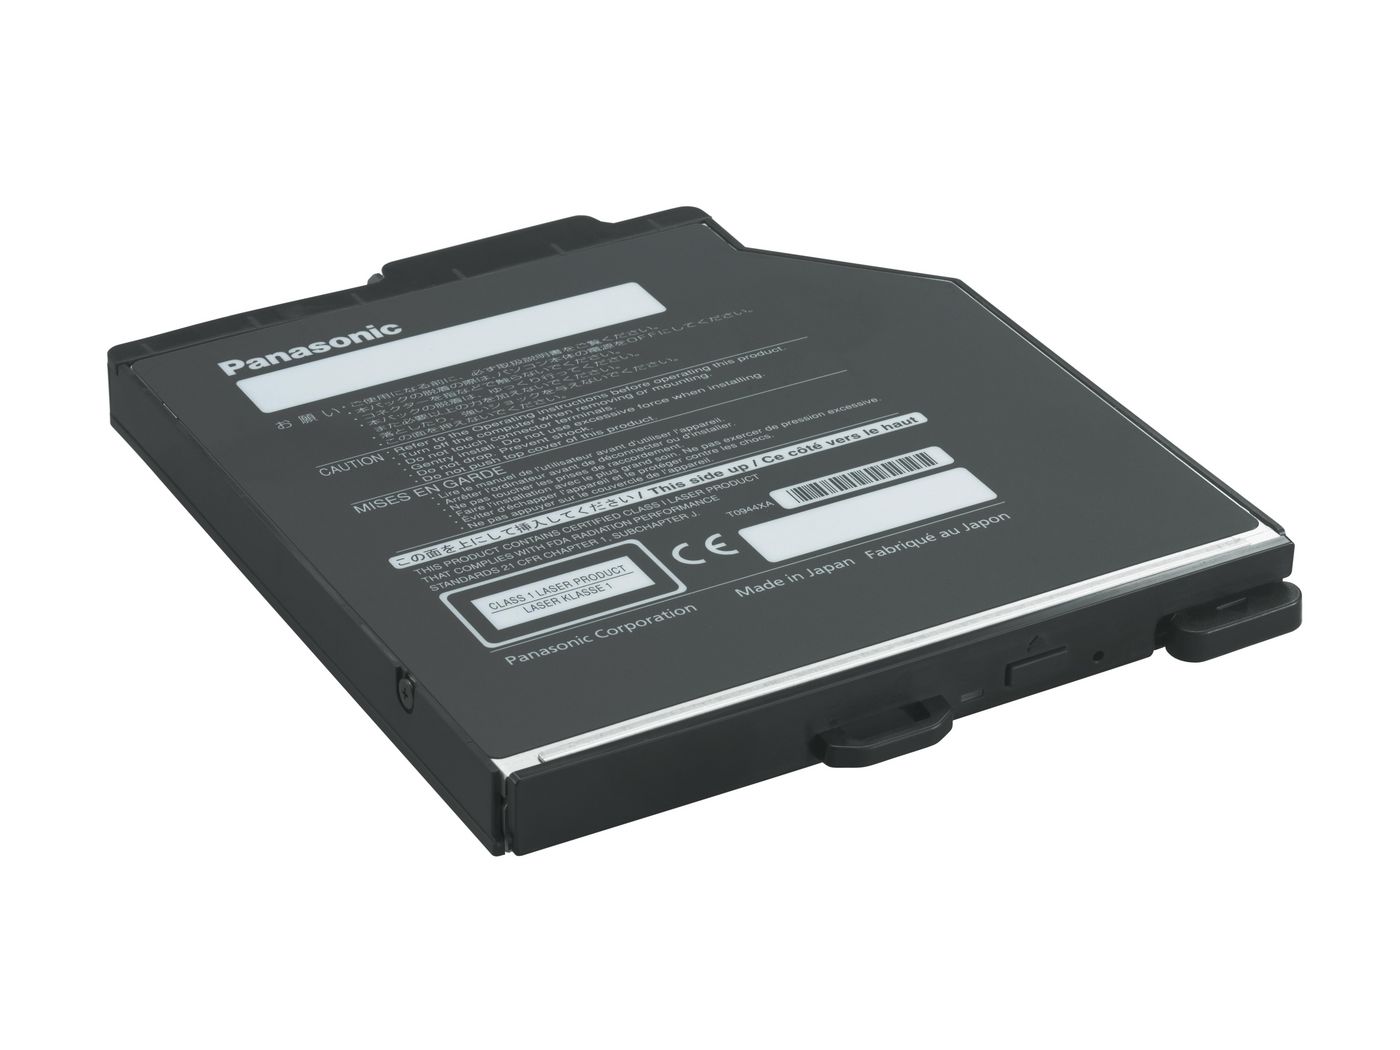 Panasonic CF-VDM312U DVD-Multi Drive with Power DVD 